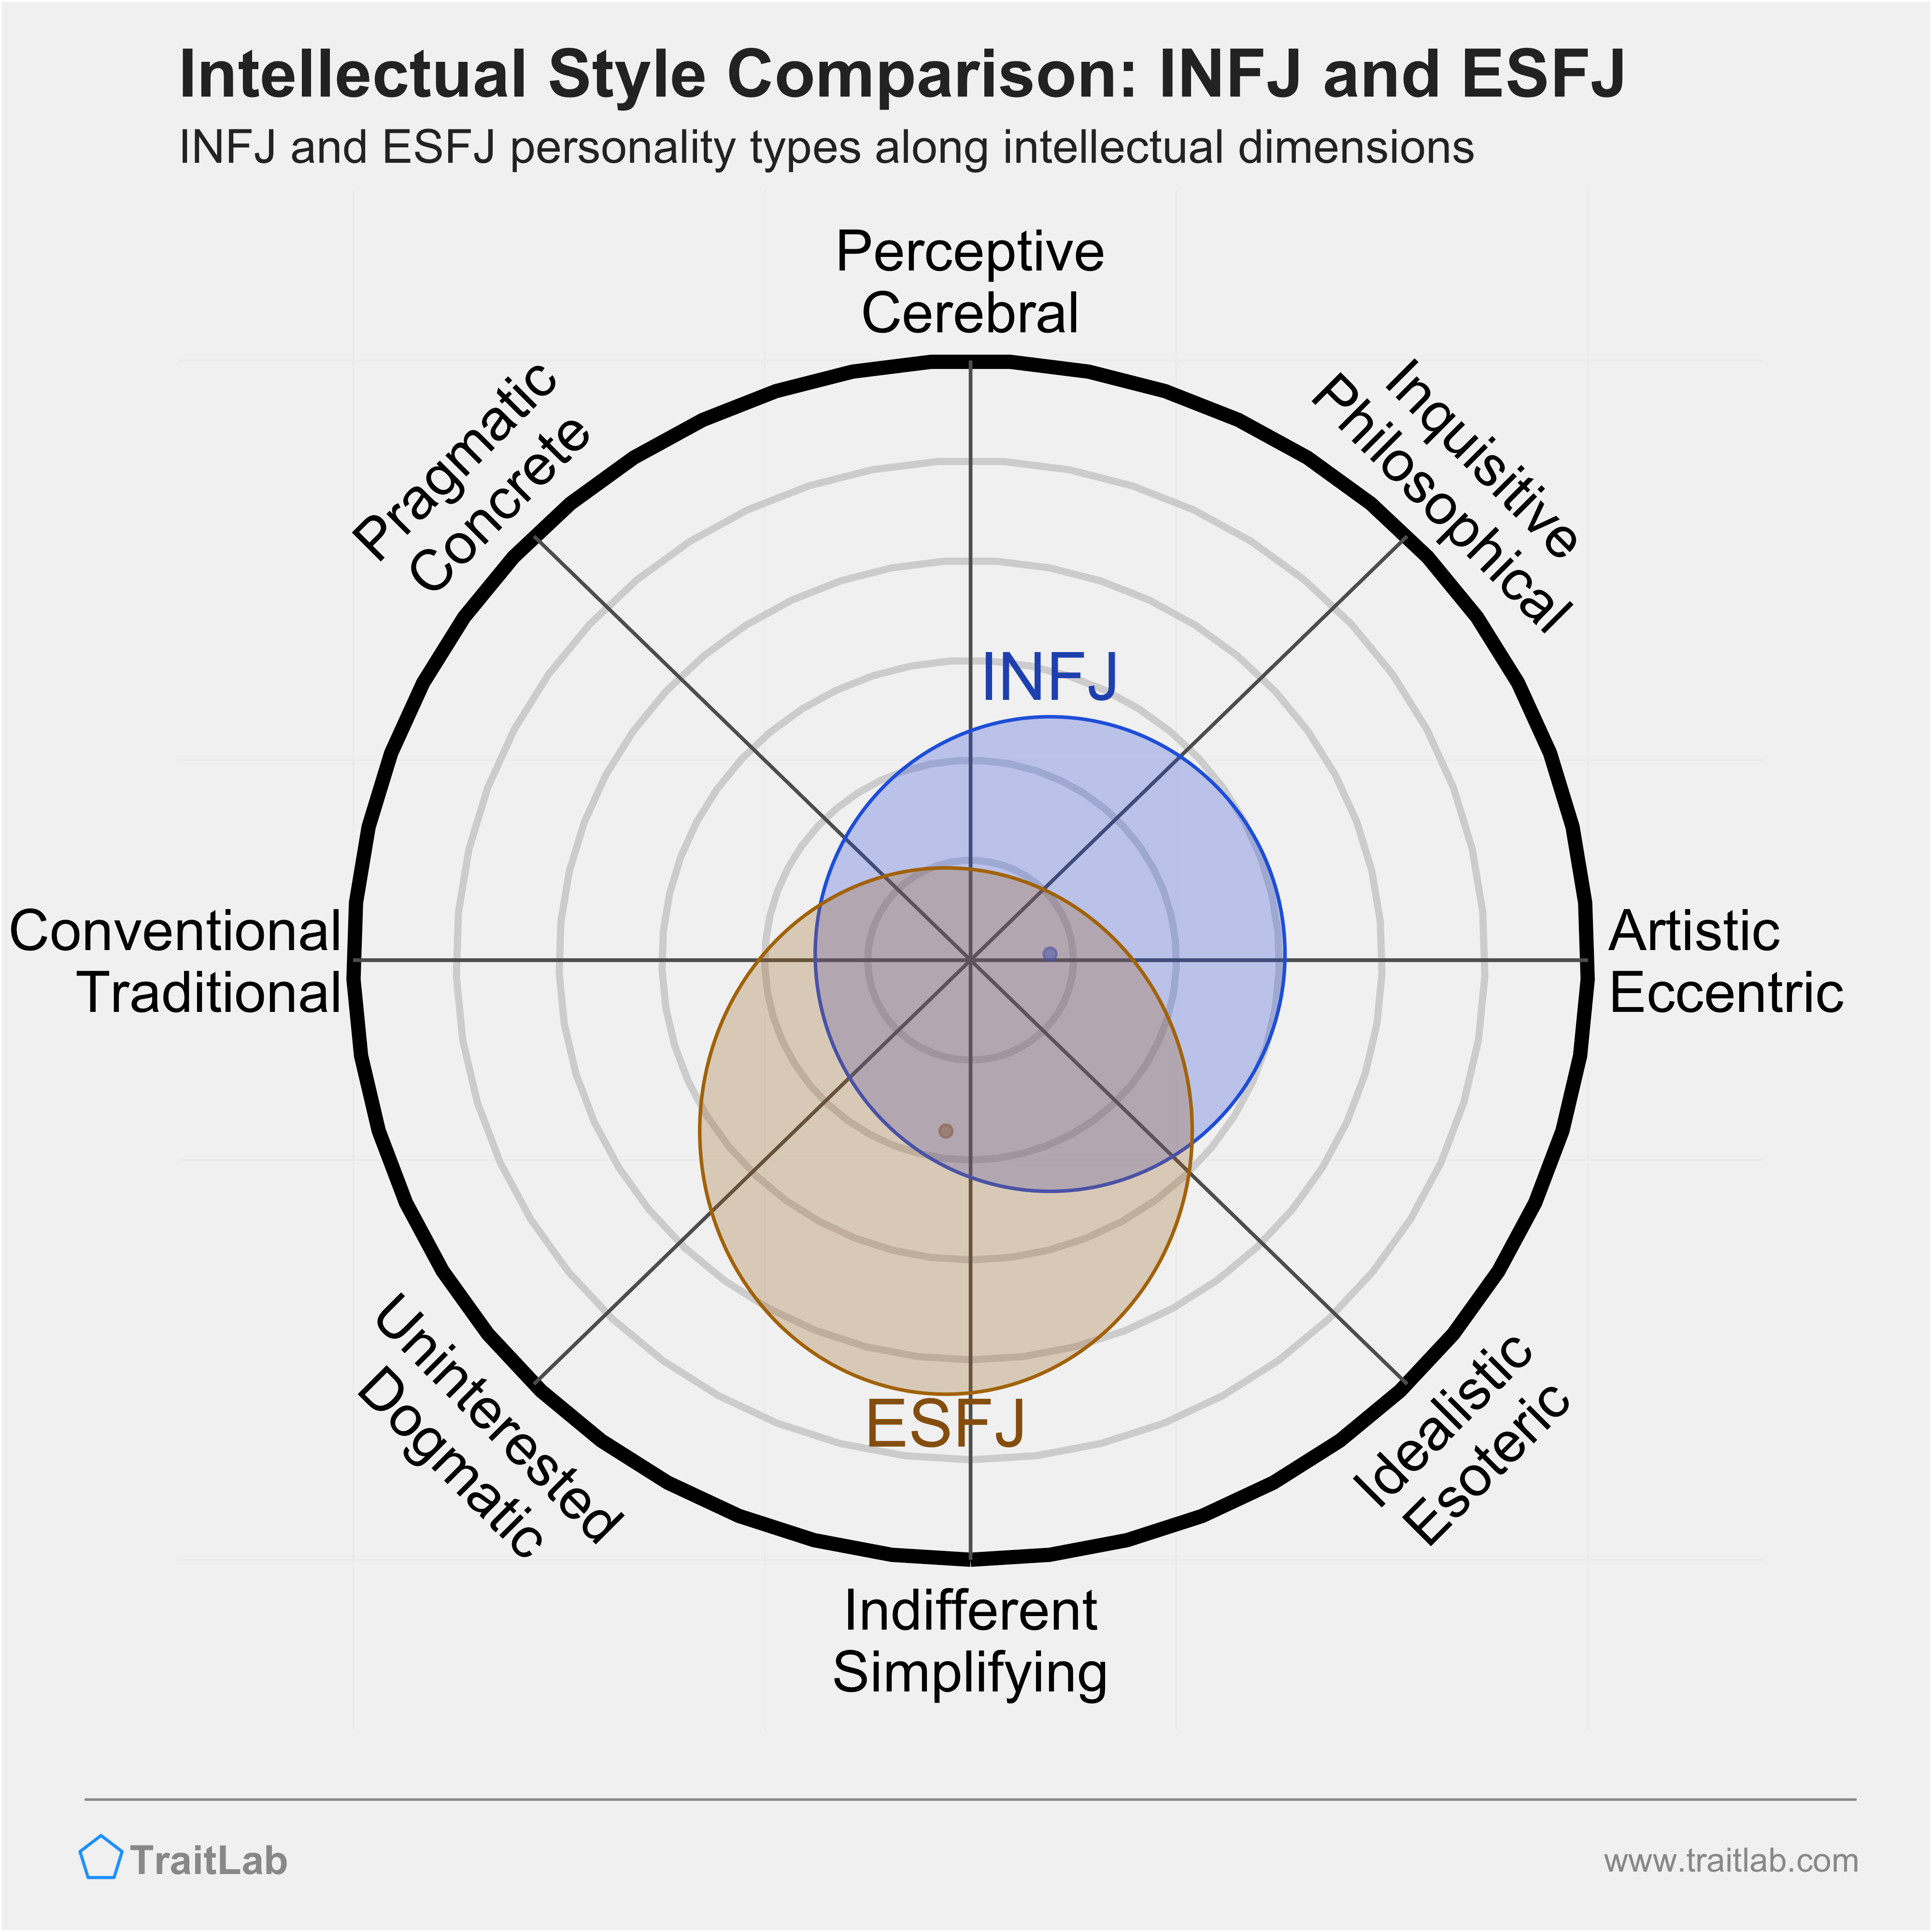 INFJ and ESFJ comparison across intellectual dimensions